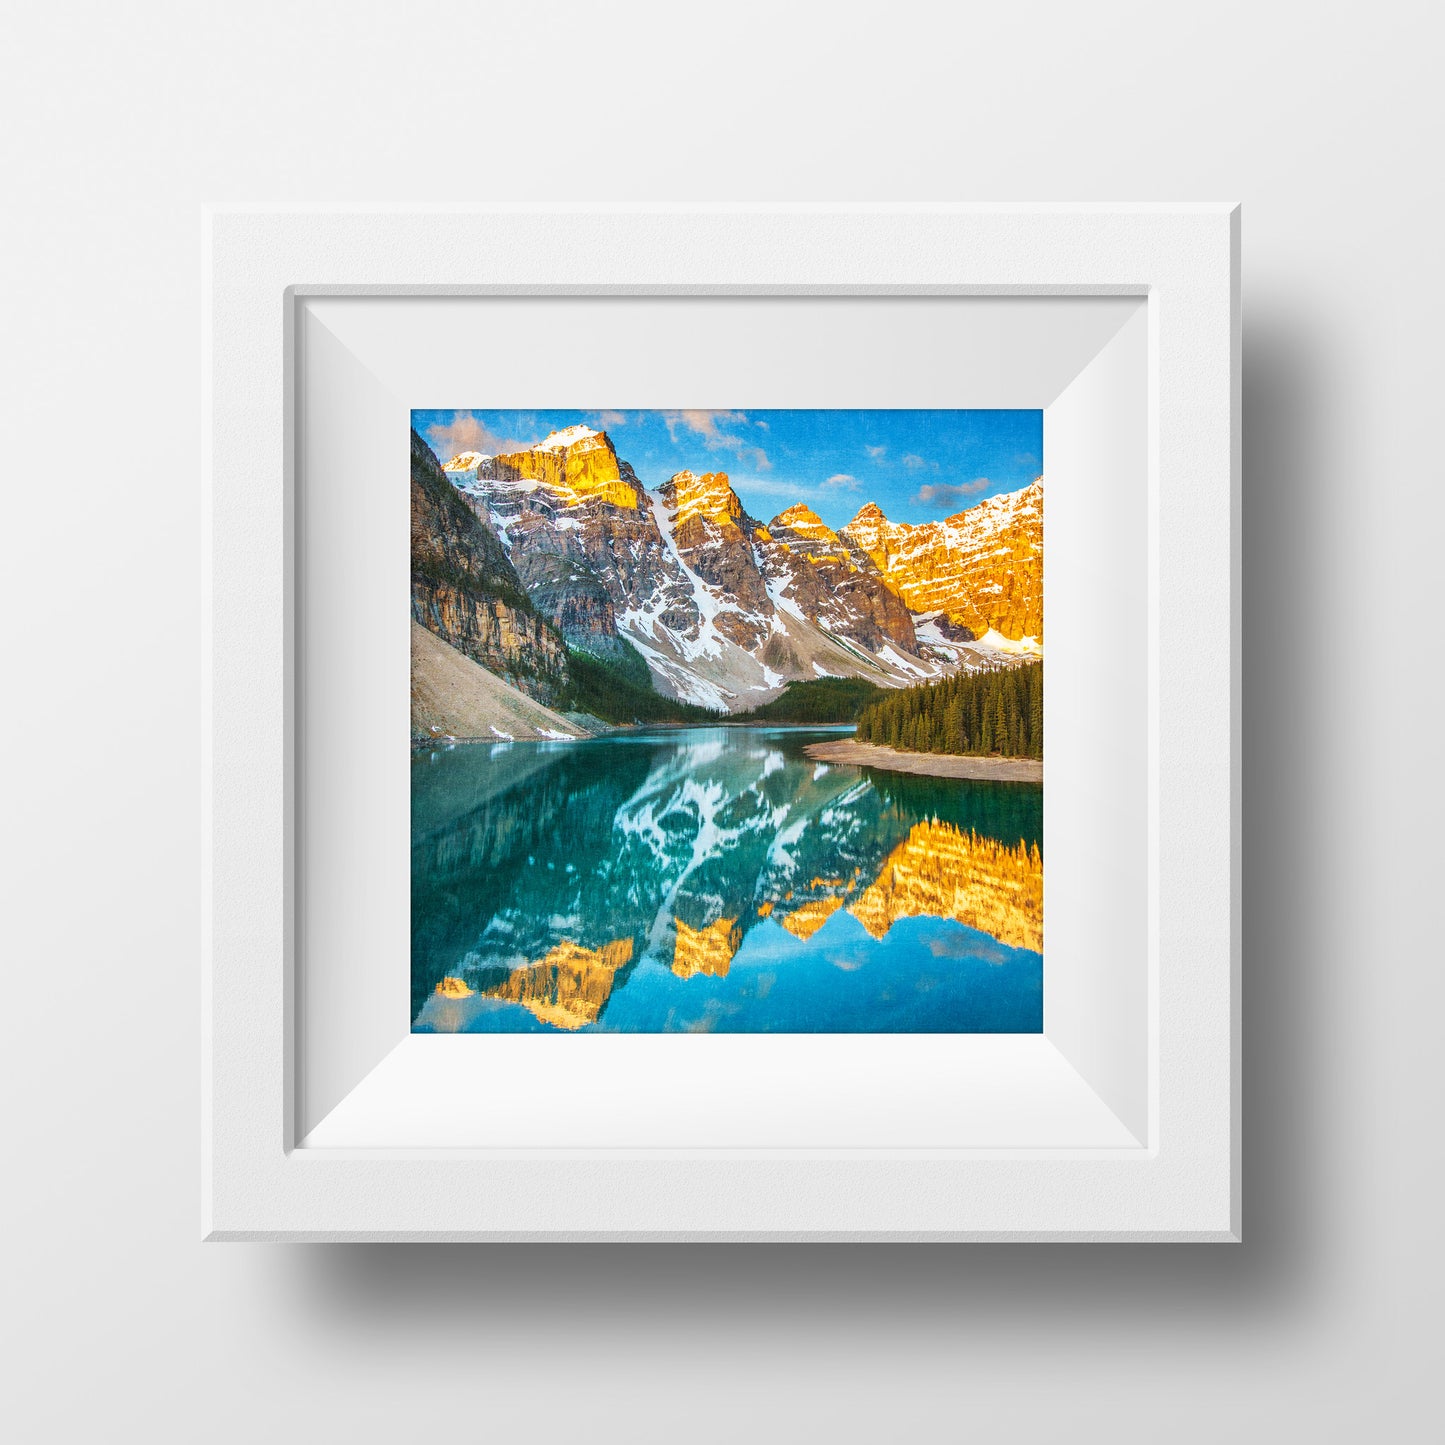 SALE 8x8" Metallic Print <br>Moraine Lake Spring Sunrise Banff National Park